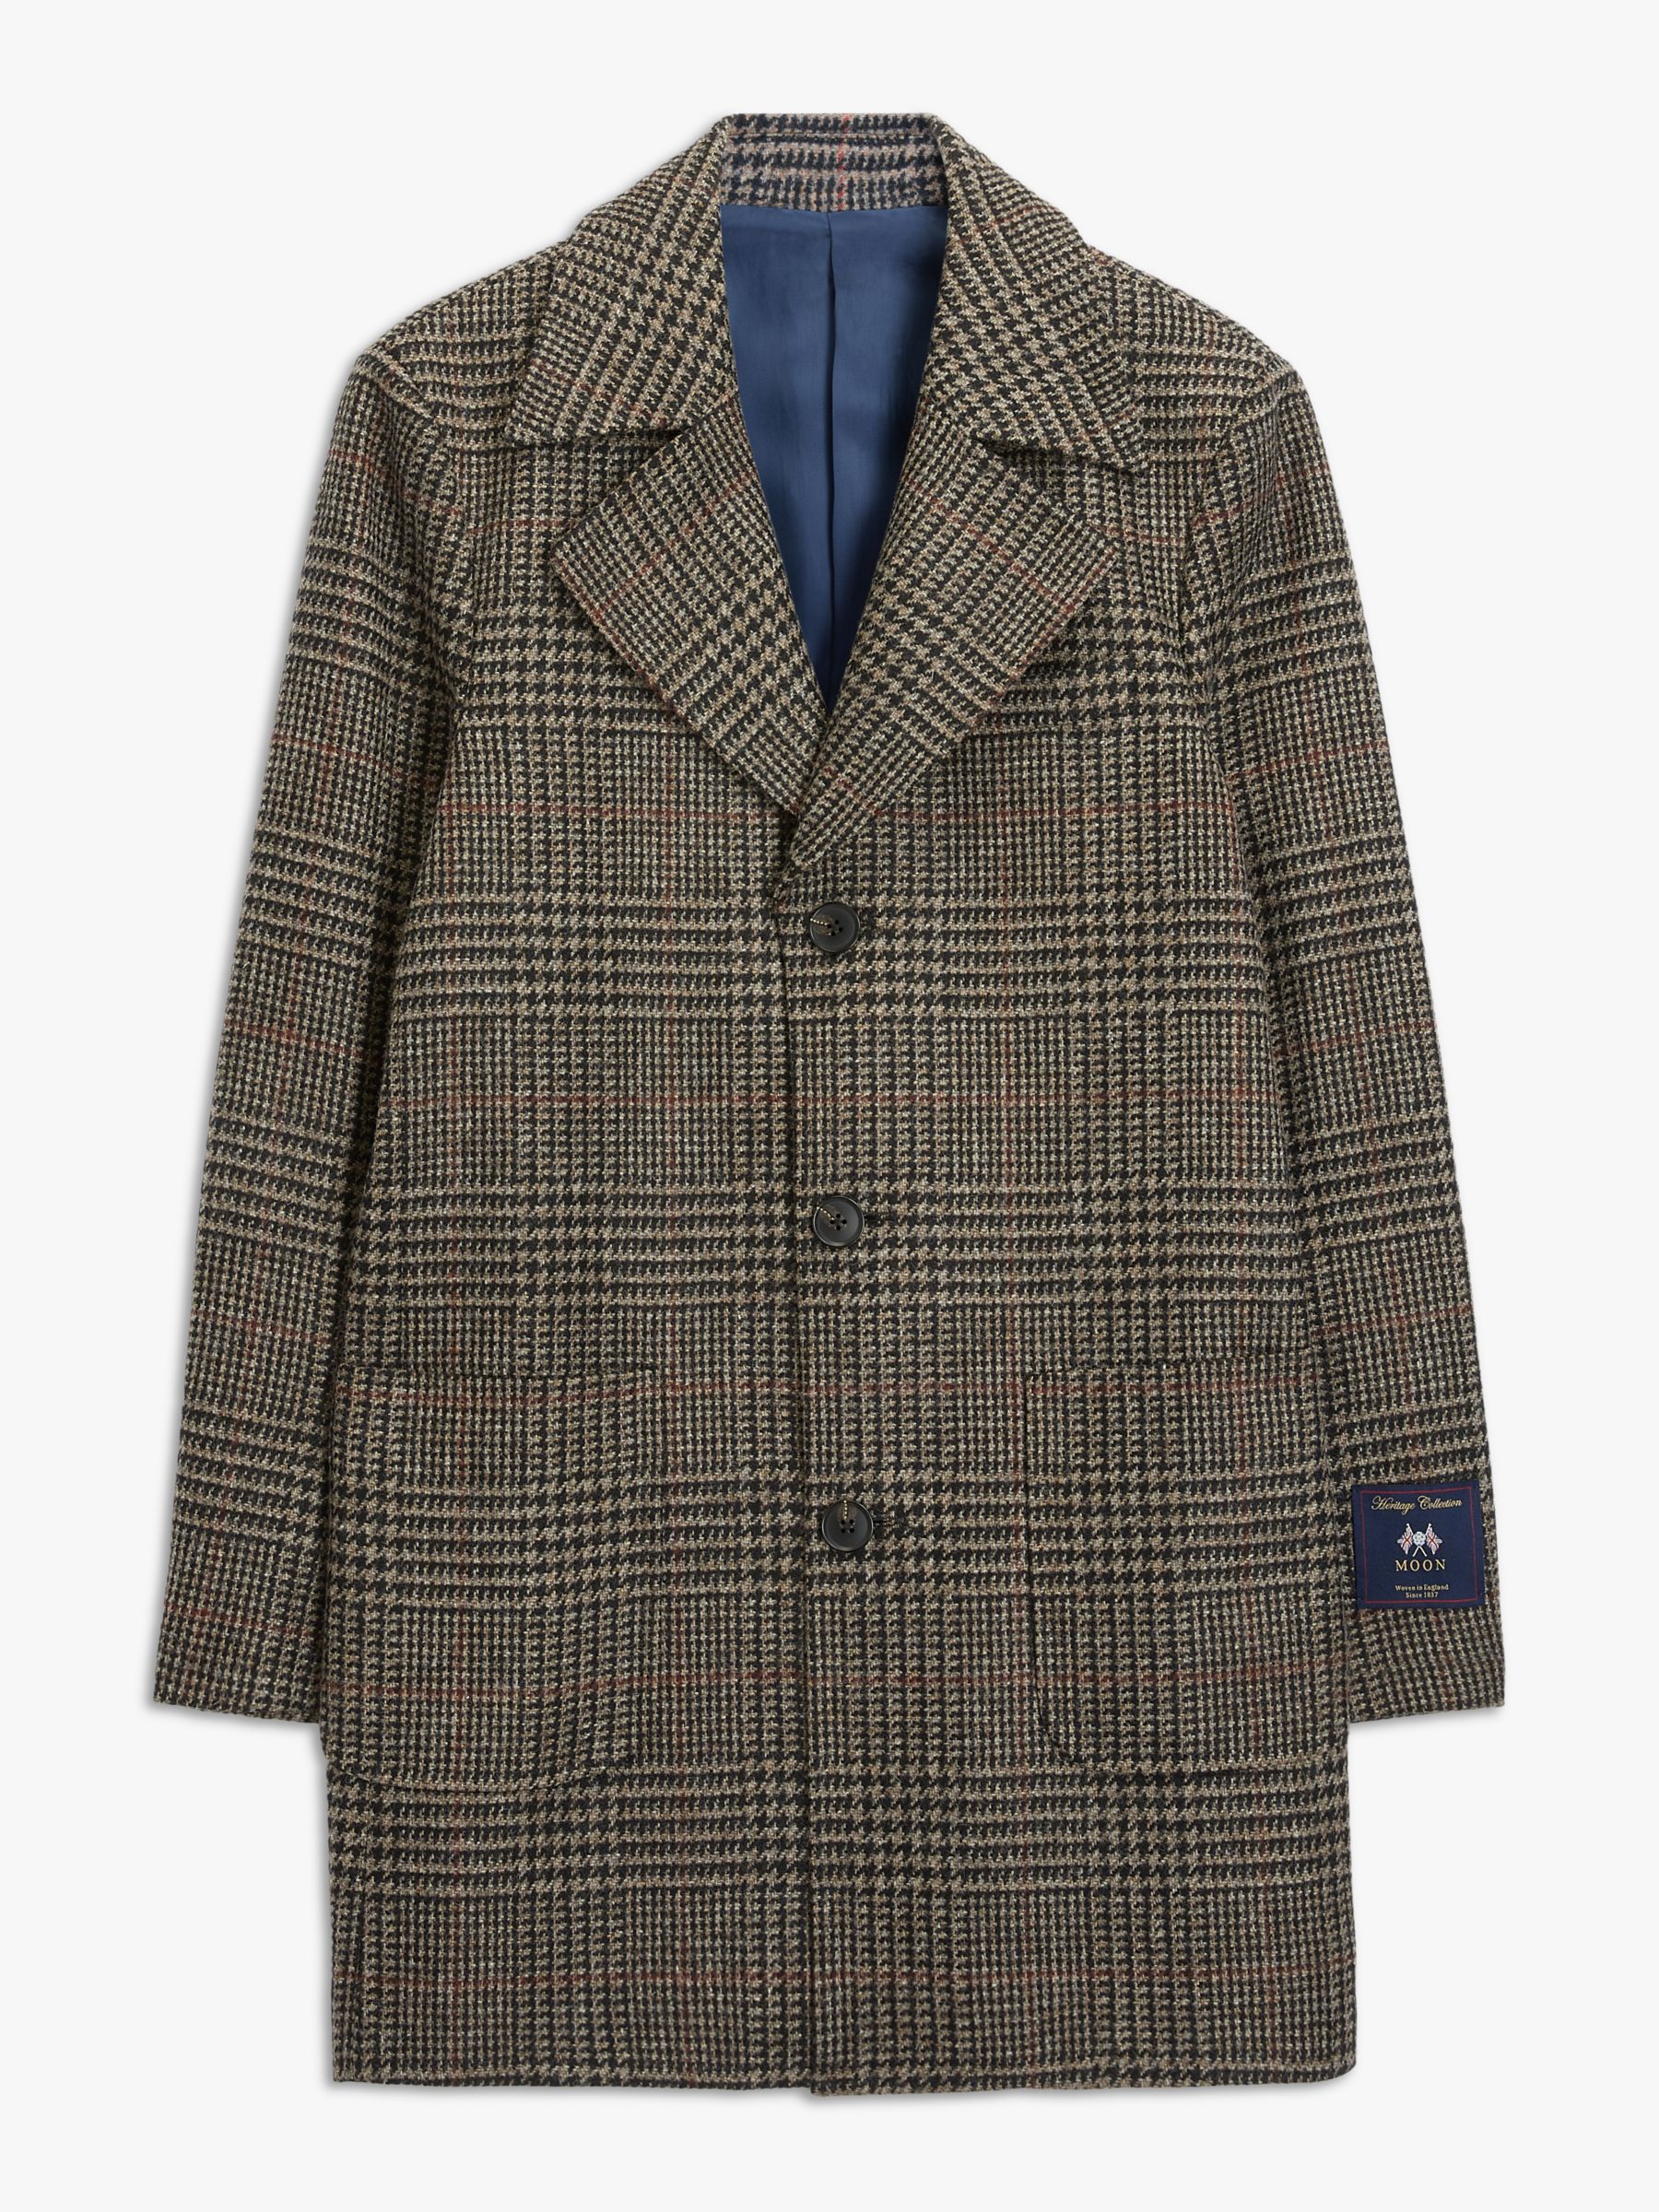 John Lewis & Partners British Wool Glen Check Overcoat, Tan